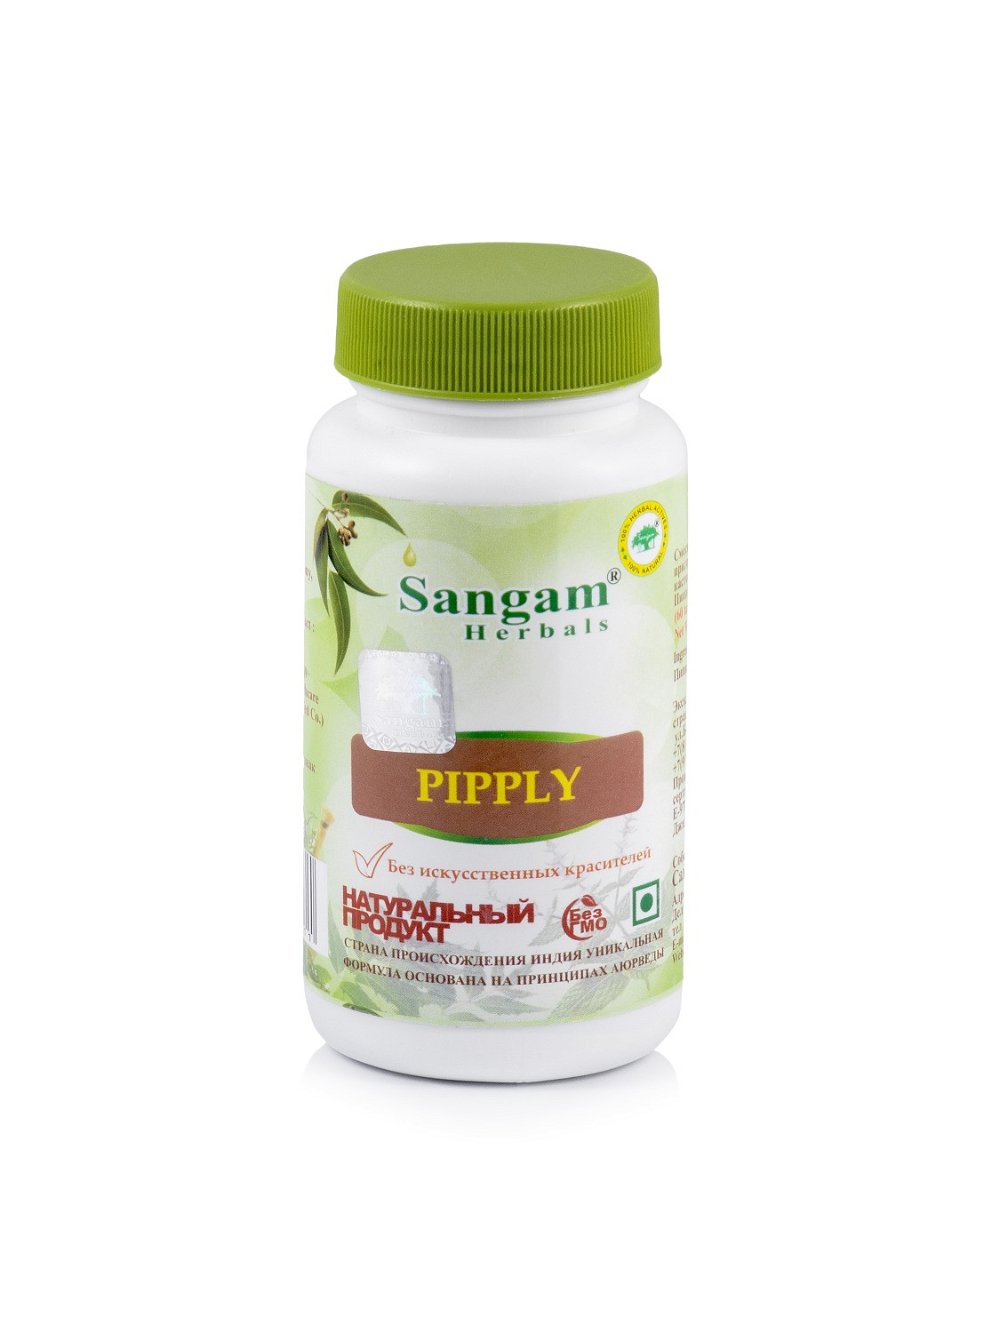 Пиппали Sangam Herbals (60 таблеток), 